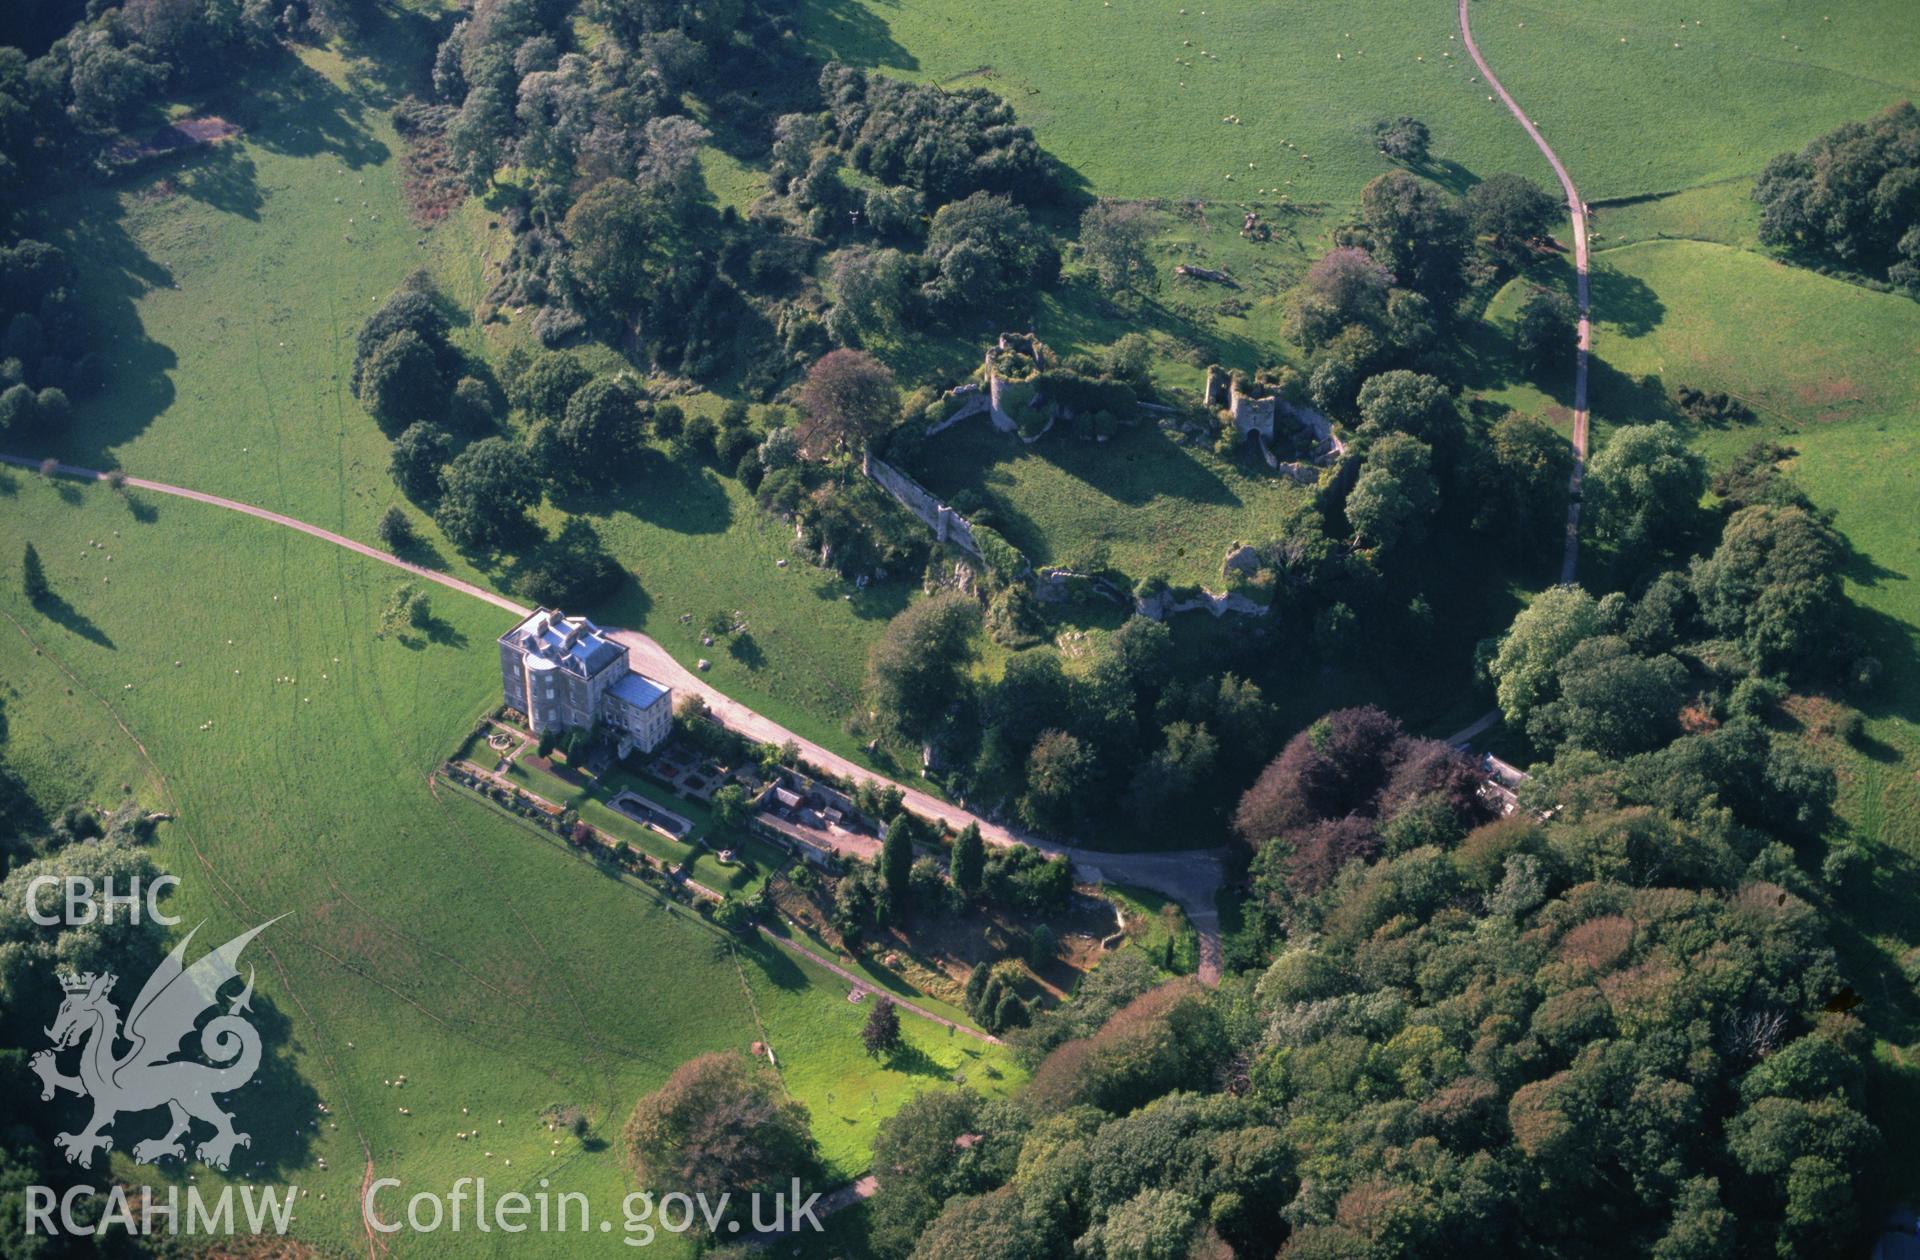 Slide of RCAHMW colour oblique aerial photograph of Penrice Castle, taken by C.R. Musson, 26/8/1991.